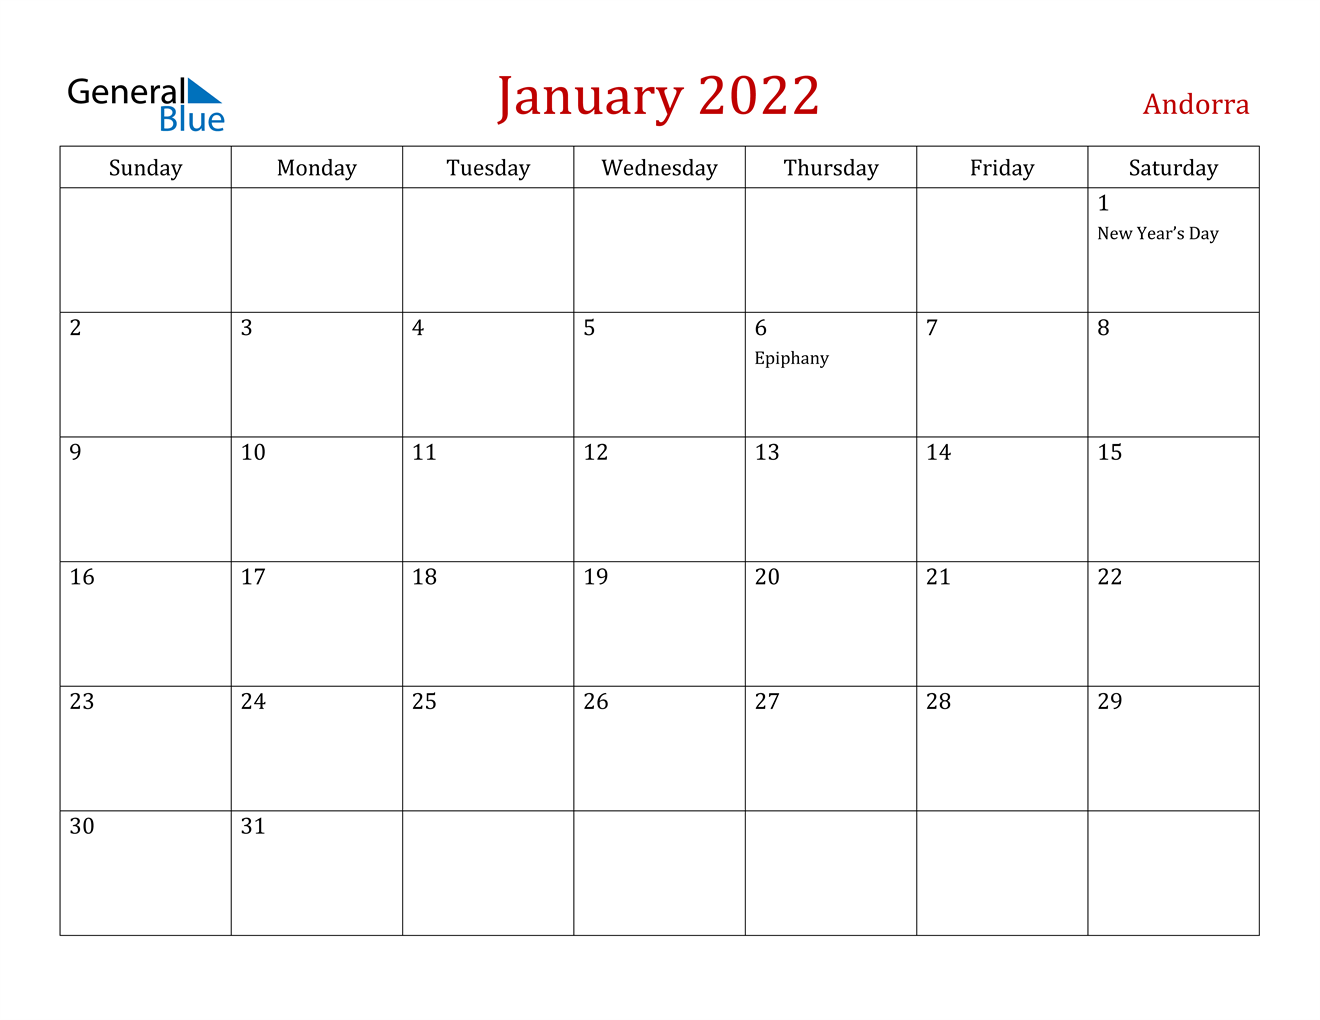 January 2022 Calendar - Andorra